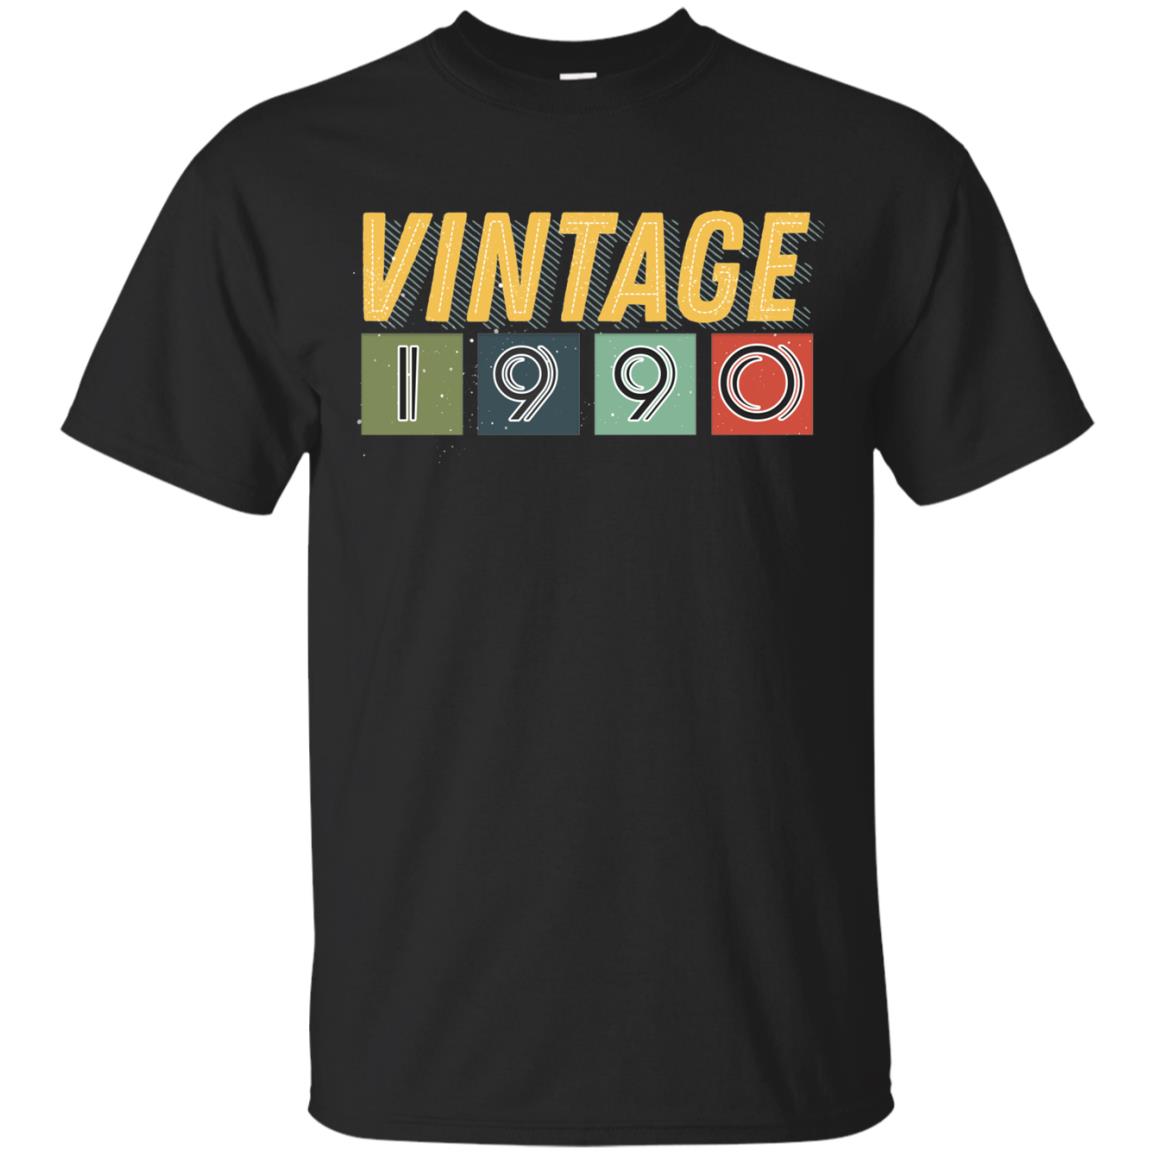 Vintage 1990 28th Birthday Gift Shirt For Mens Or WomensG200 Gildan Ultra Cotton T-Shirt